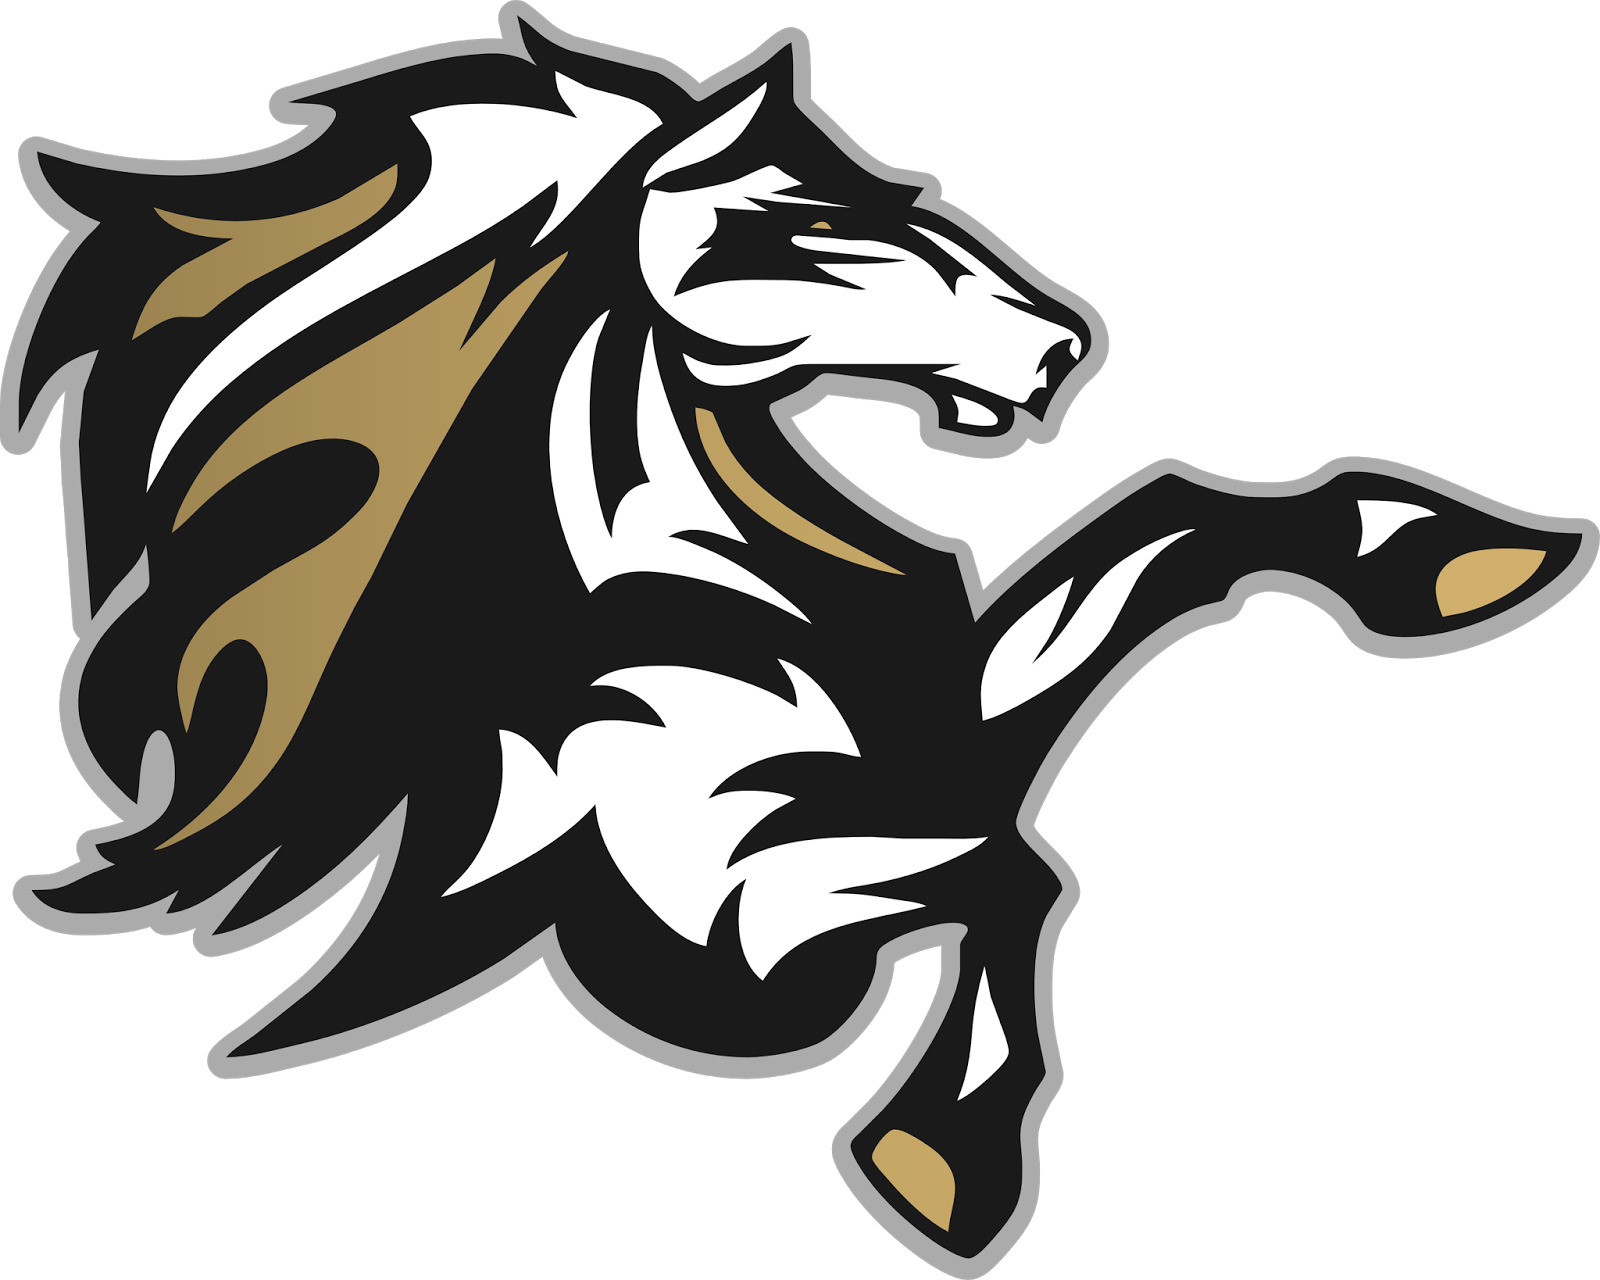 Mustang Sports Logo - Pin by Chris Basten on Stallions-Mustangs Logos | Pinterest | Sports ...